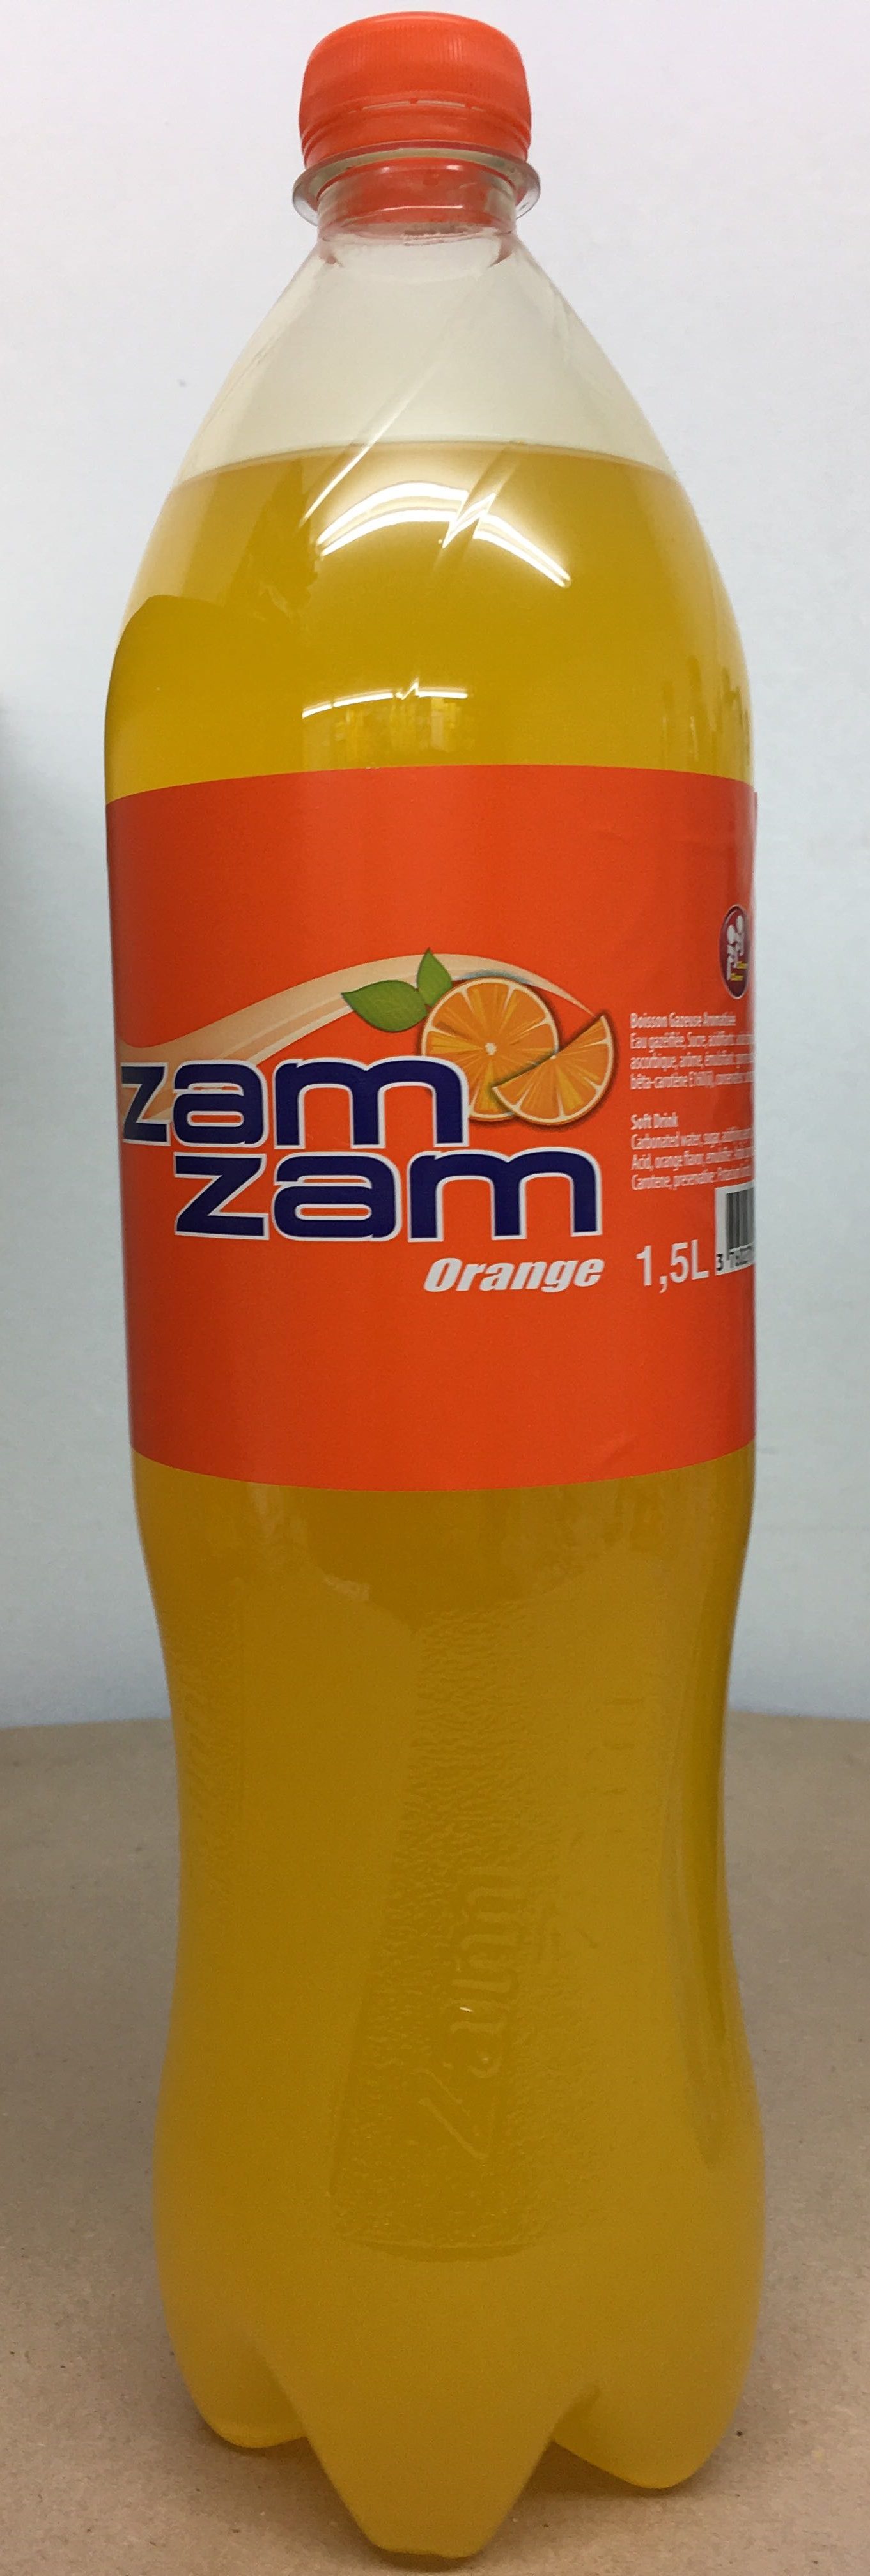 Zam Zam Orange - Producto - fr